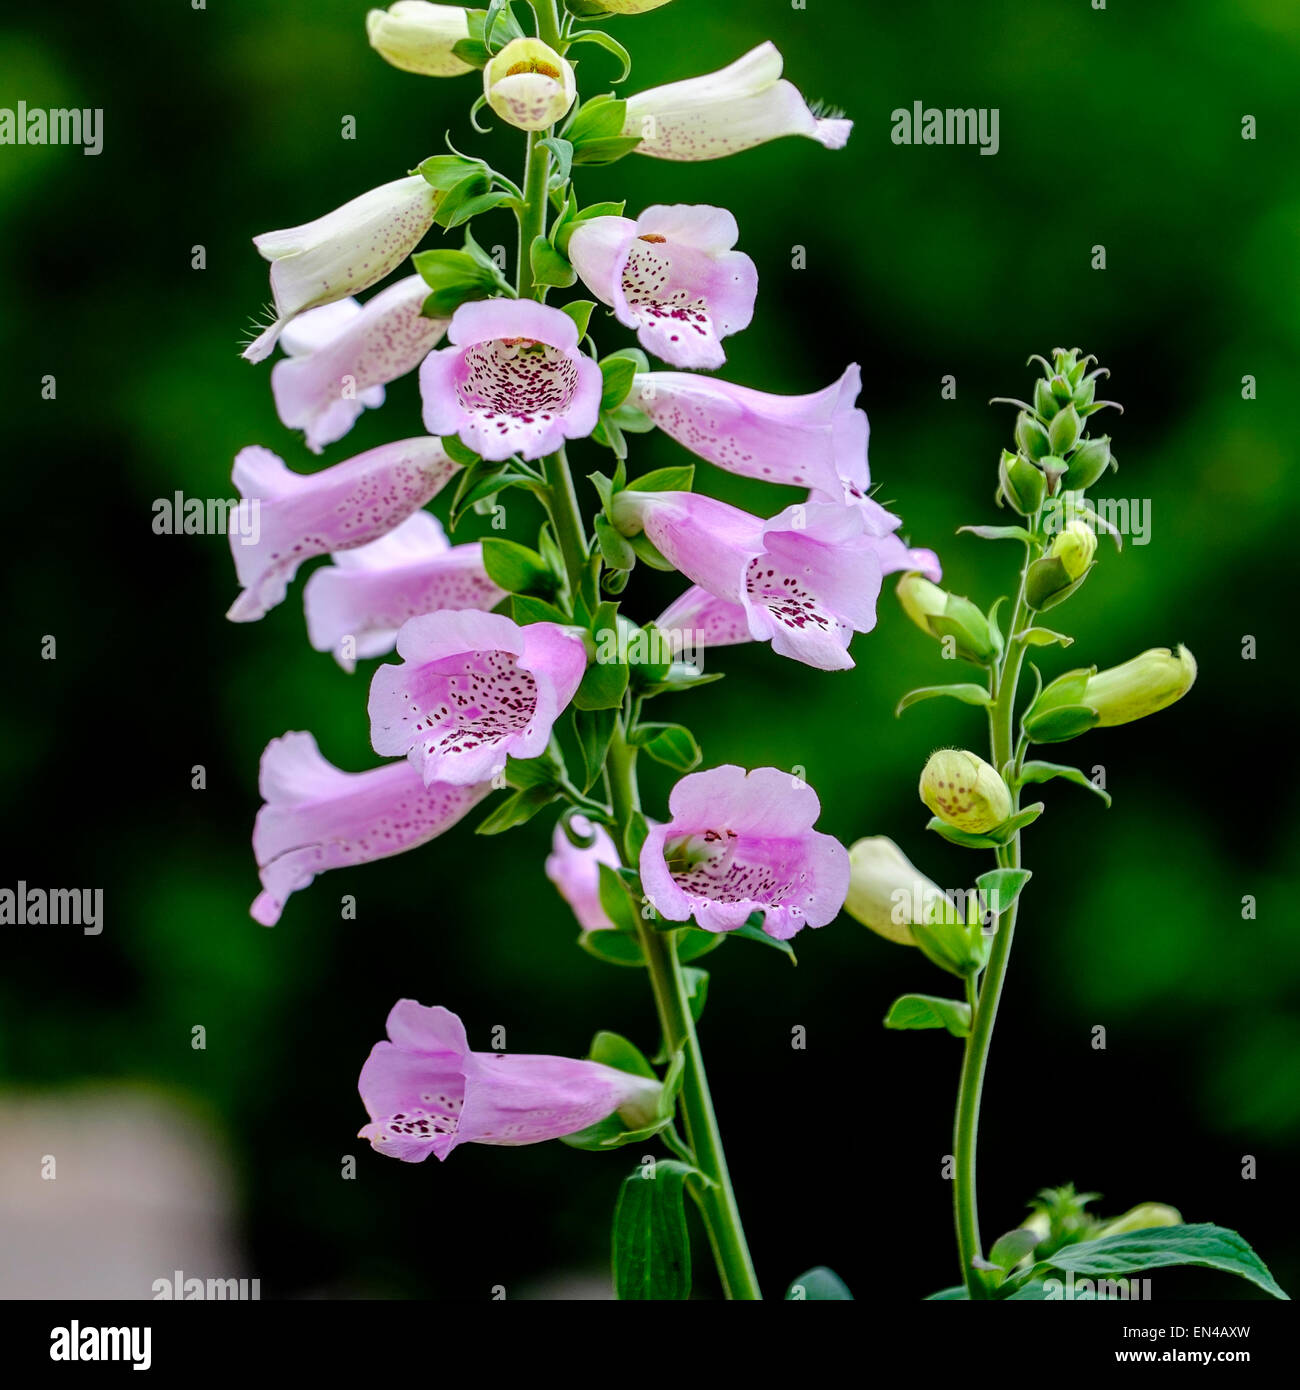 Lavender Foxglove, Digitalis purpurea, growing in a garden. Oklahoma, USA Stock Photo